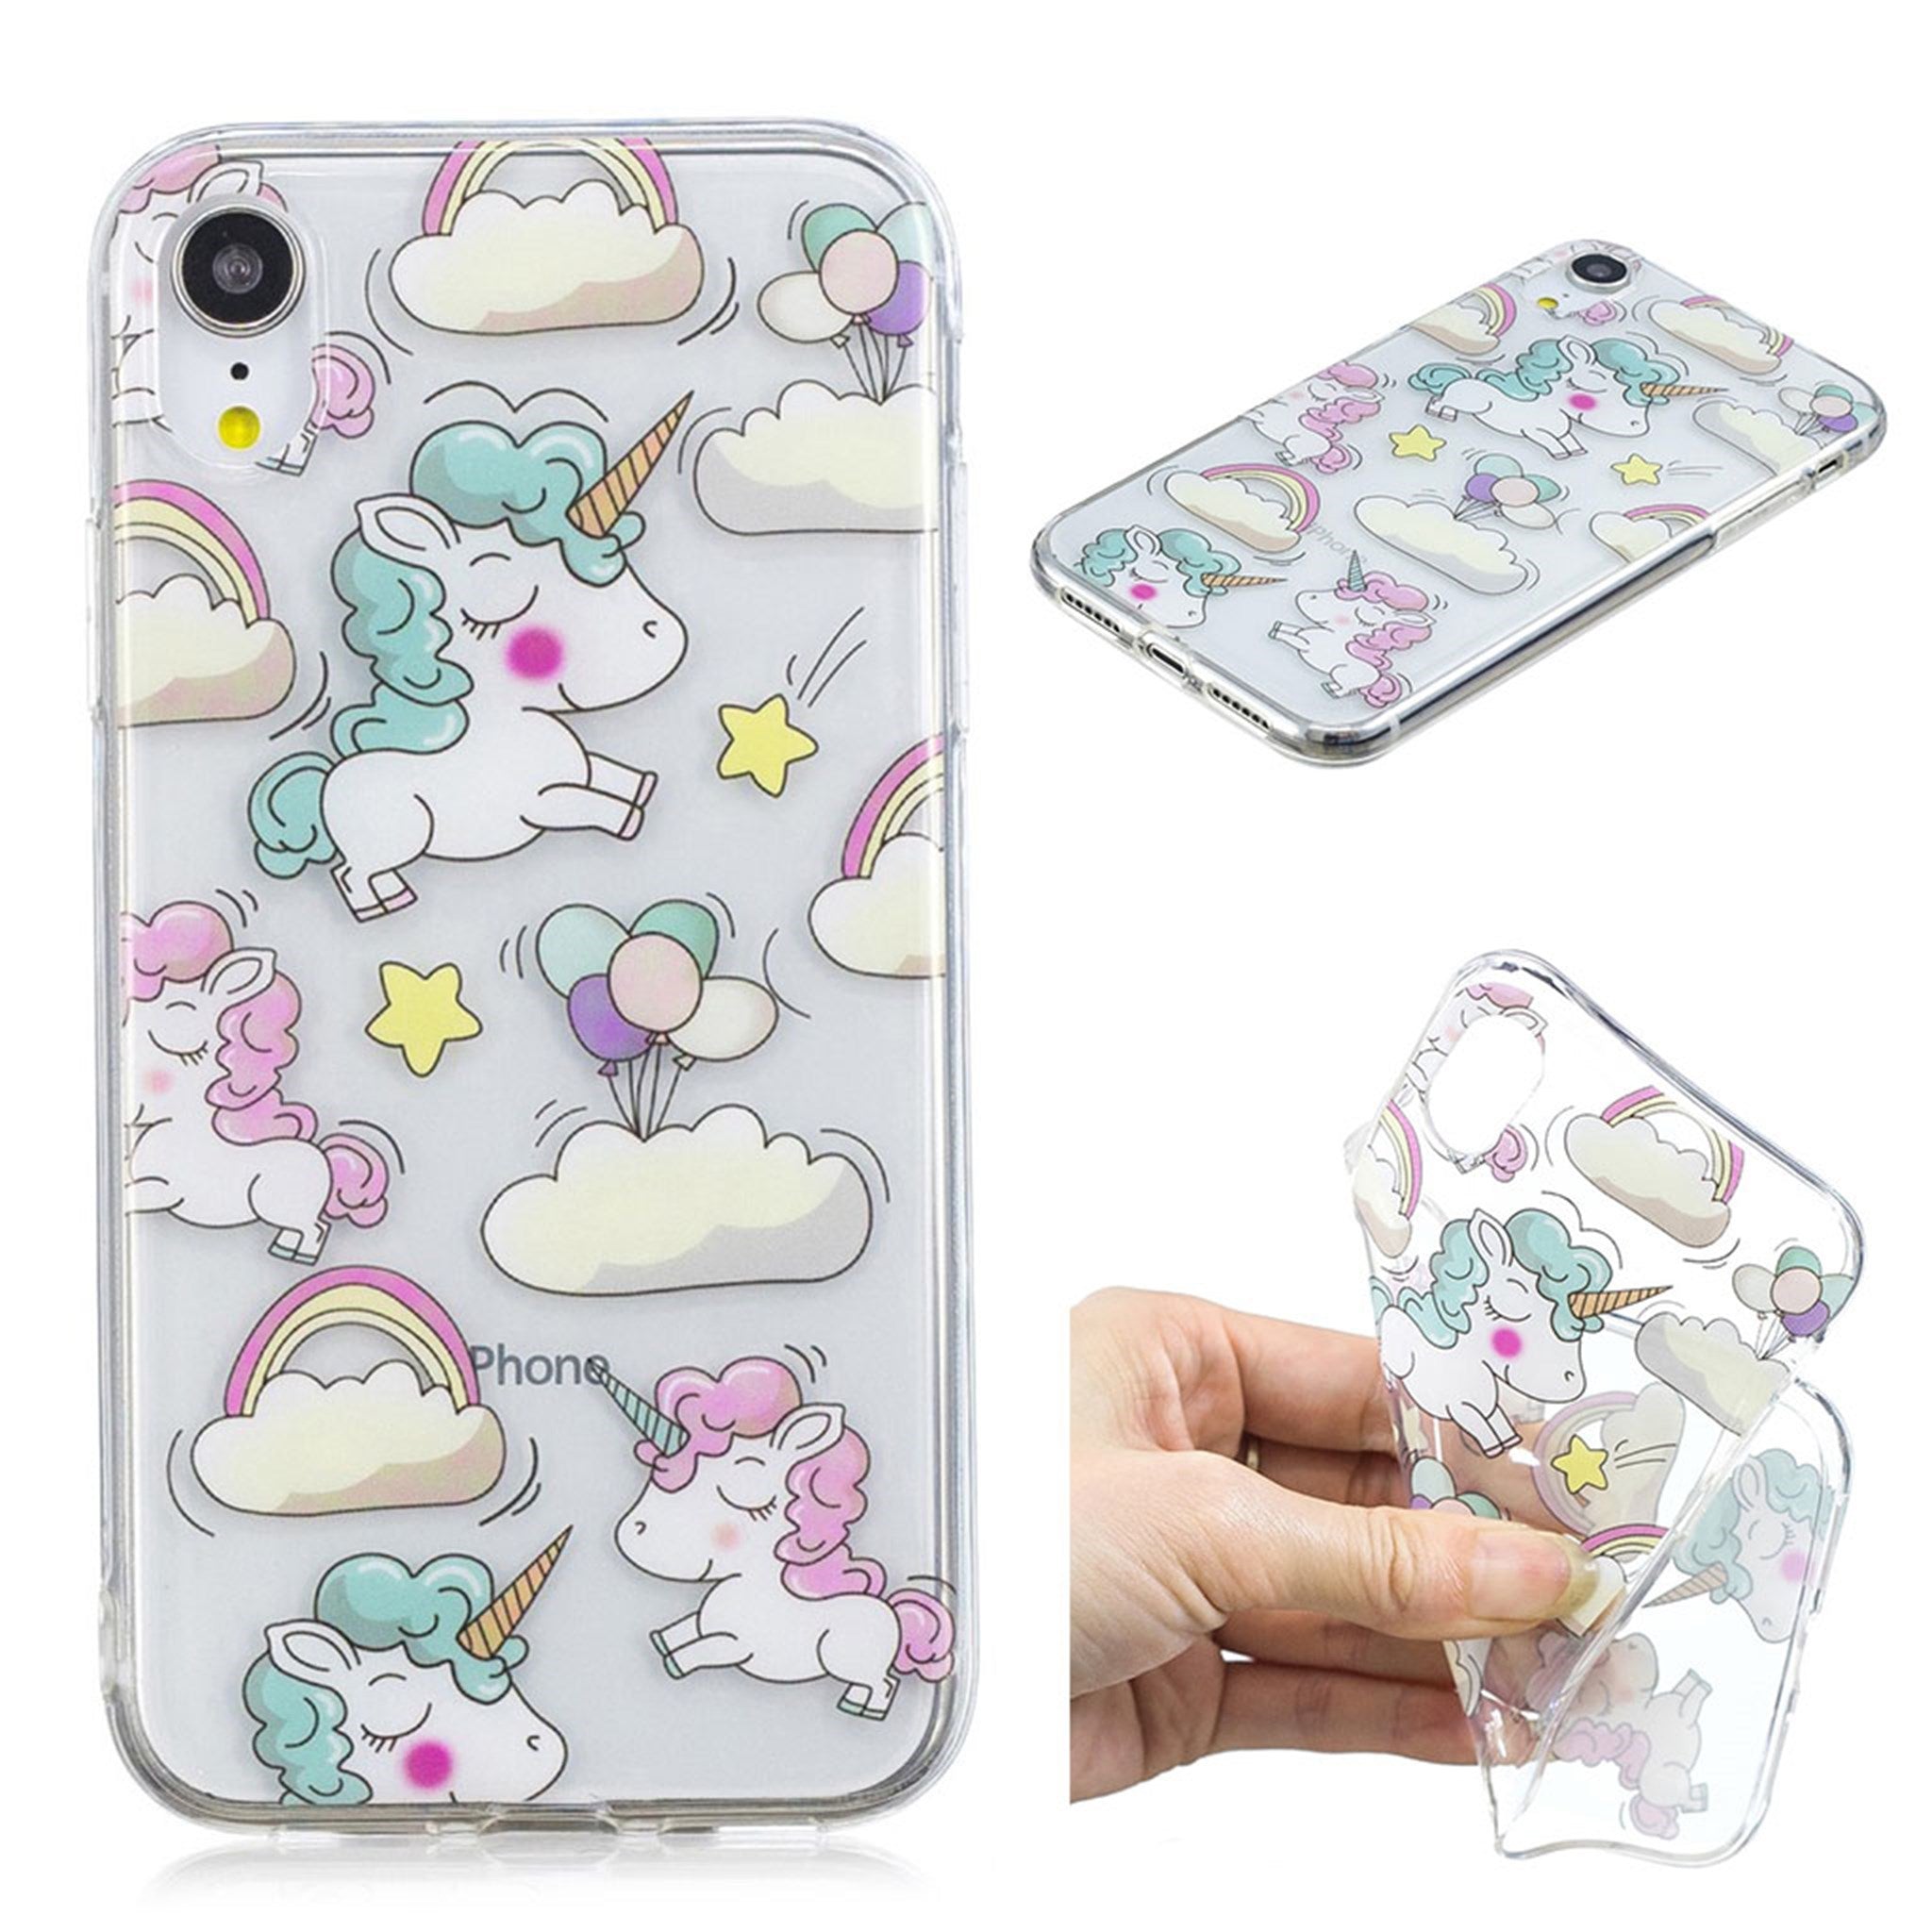 iPhone Xr pattern printing soft case - Unicorn and Rainbow